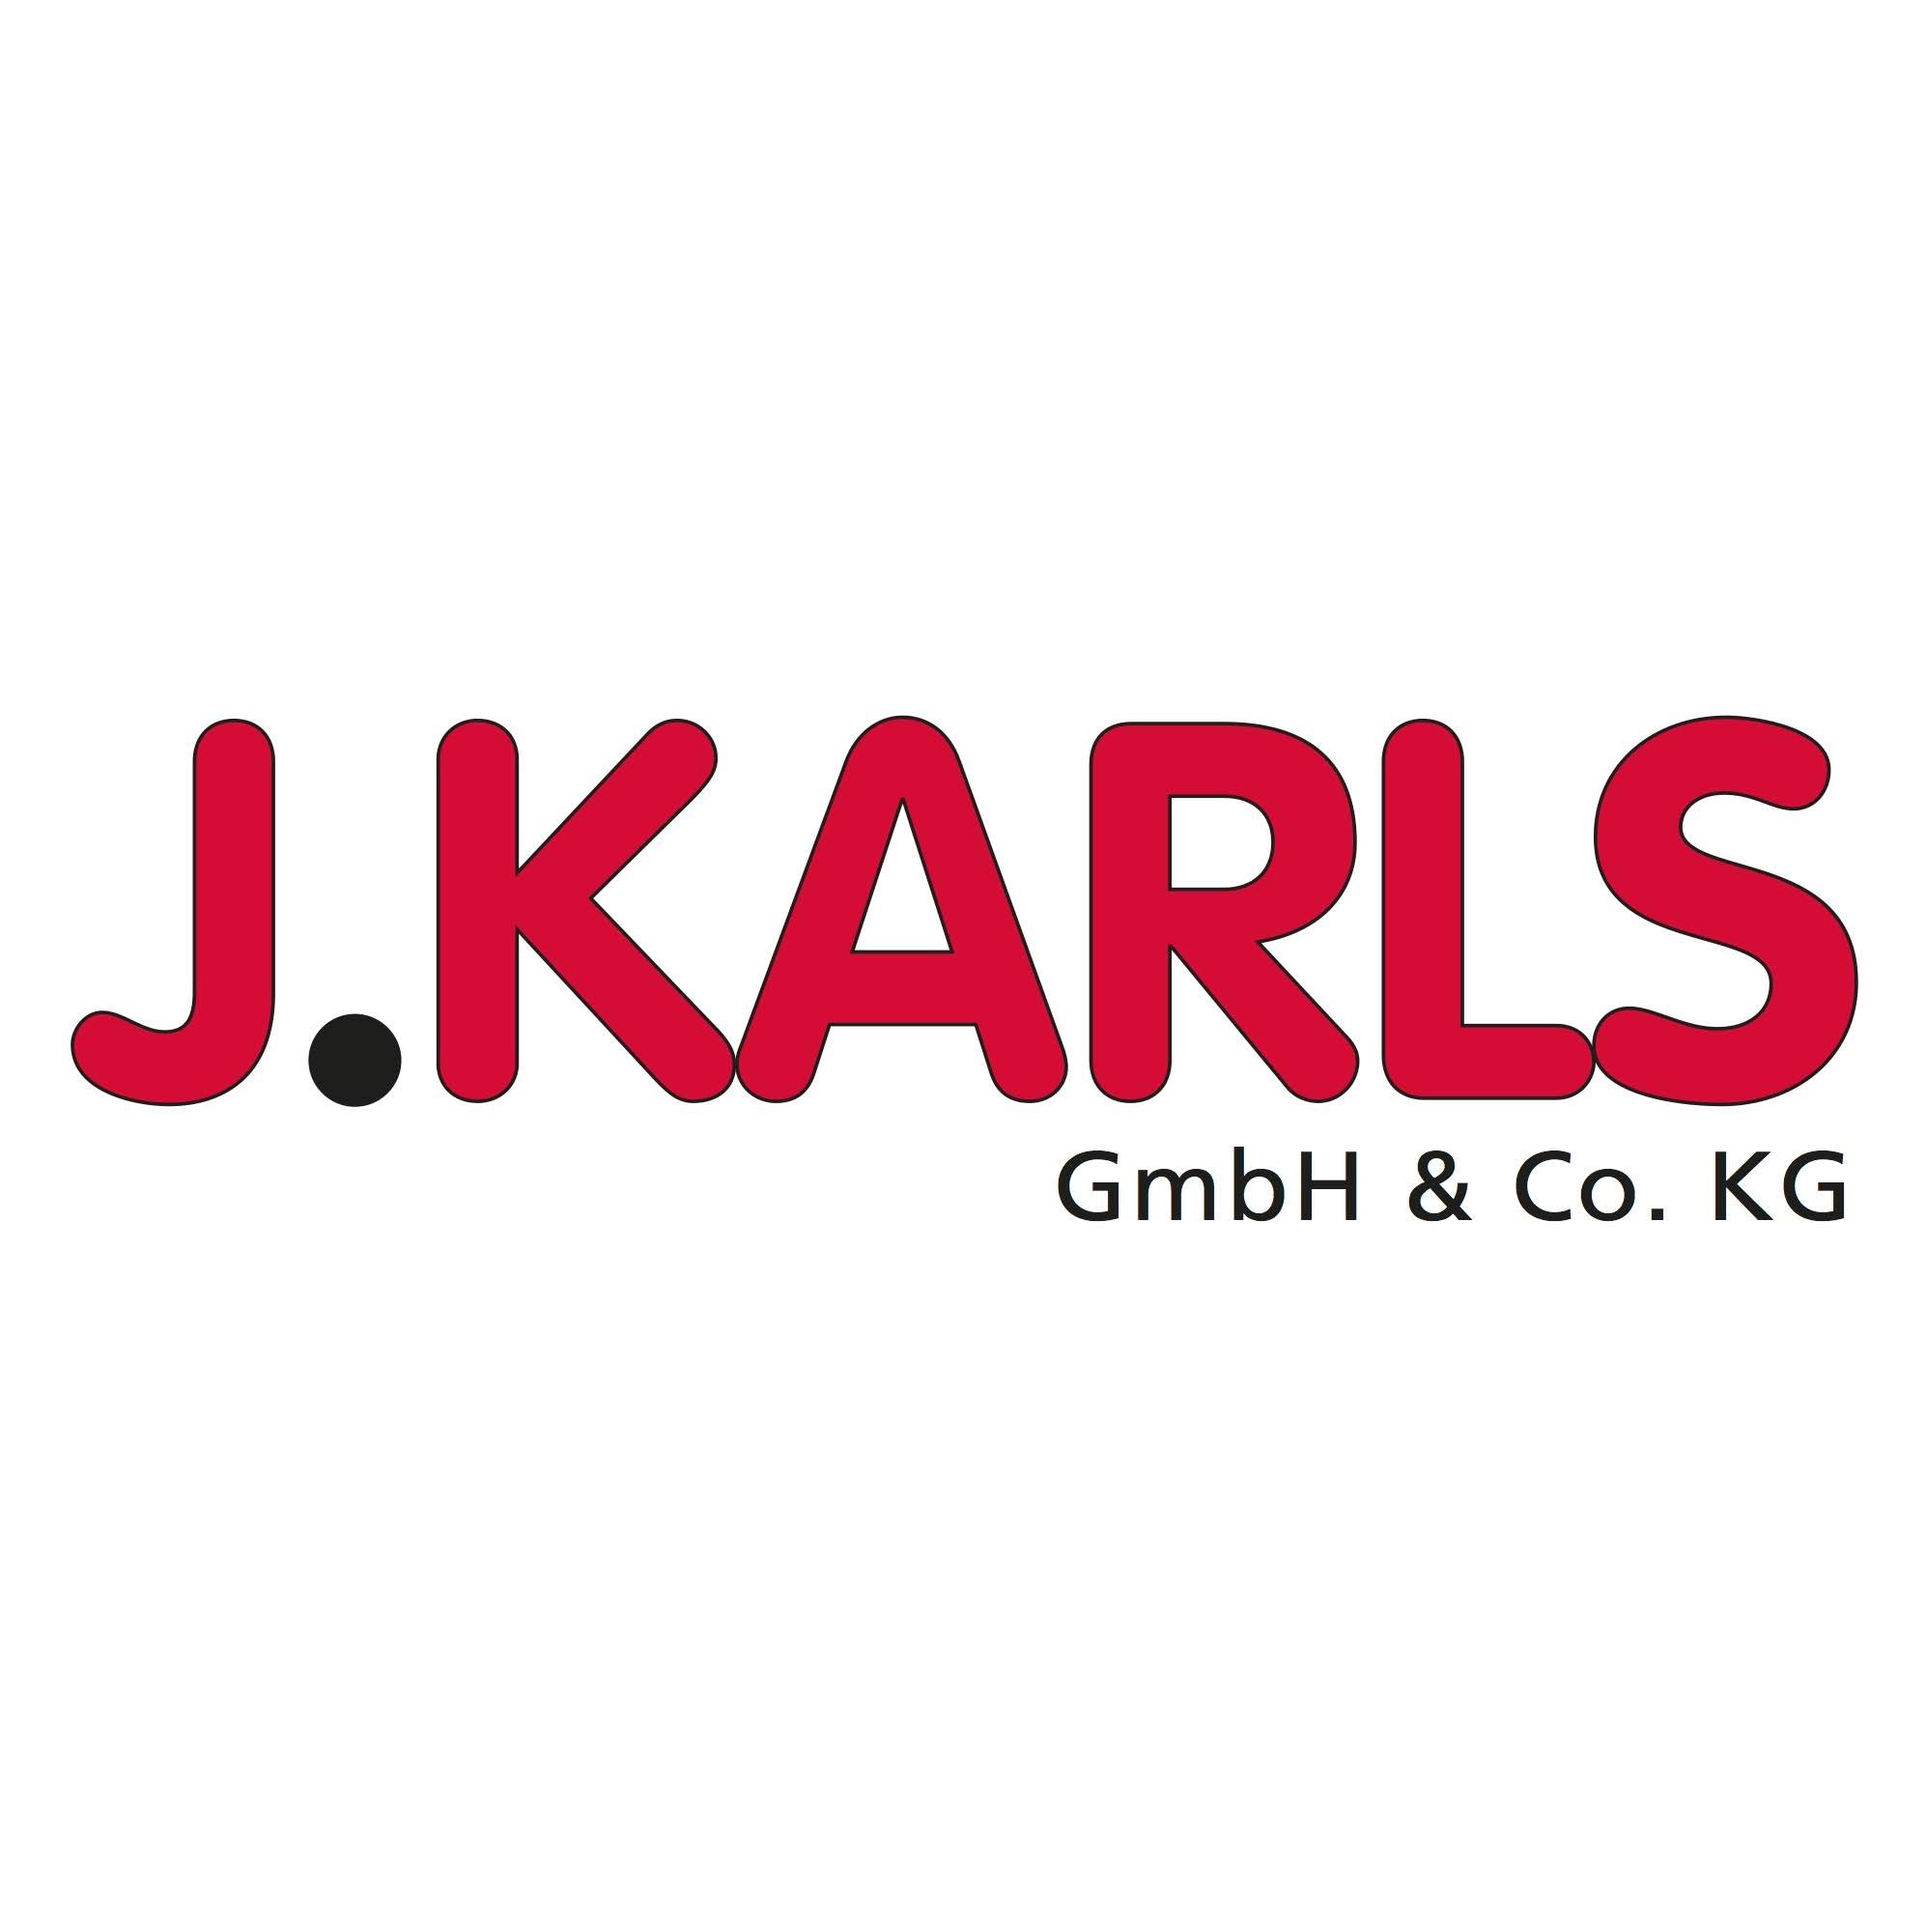 Karls J. Gmbh & Co. Kg